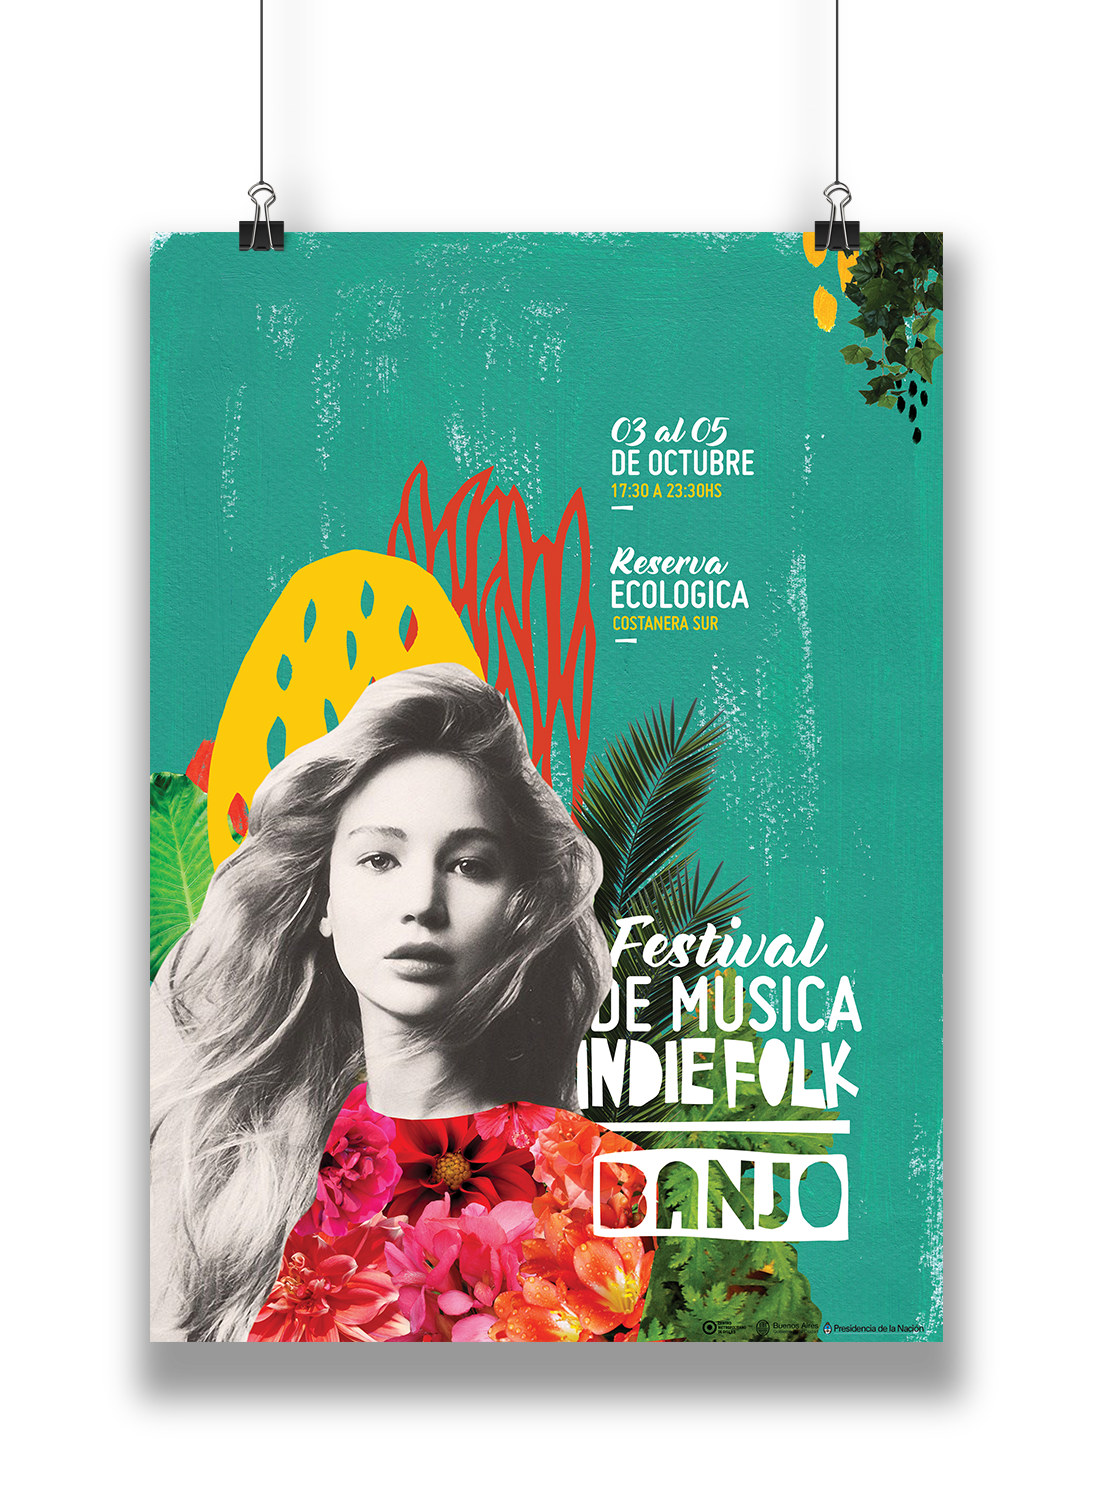 Banjo festival Gabriele diseño 3 uba fadu folk indie identity